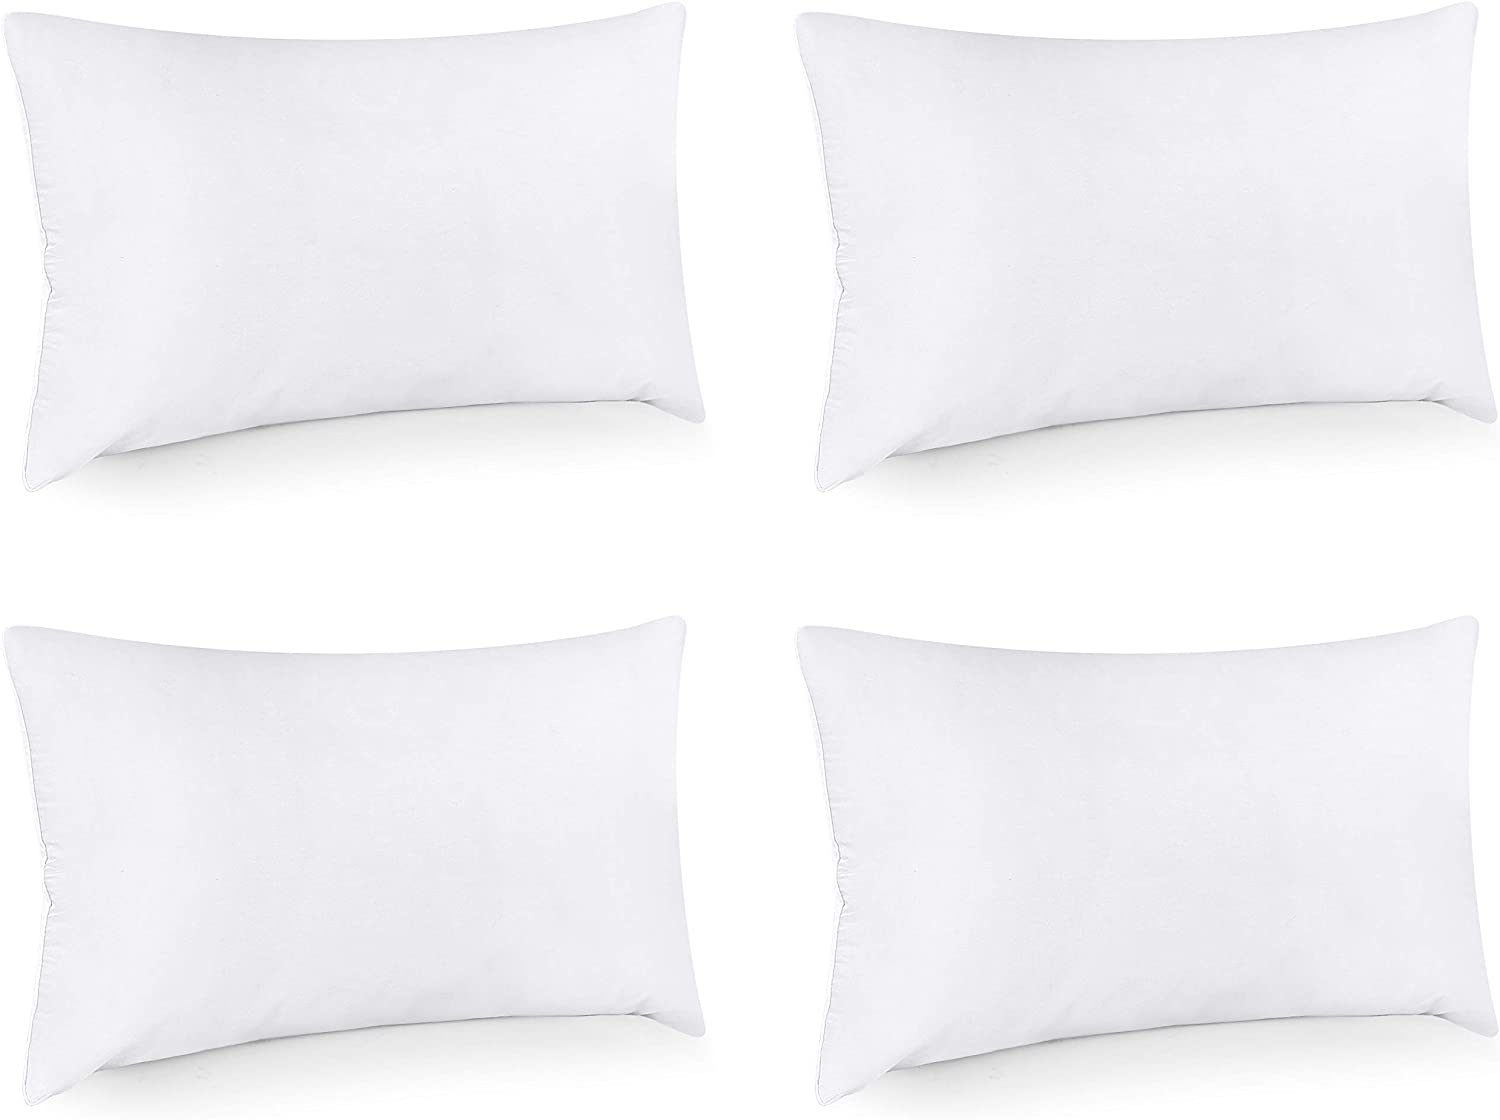  Utopia Bedding Throw Pillows Insert (Pack of 2, White